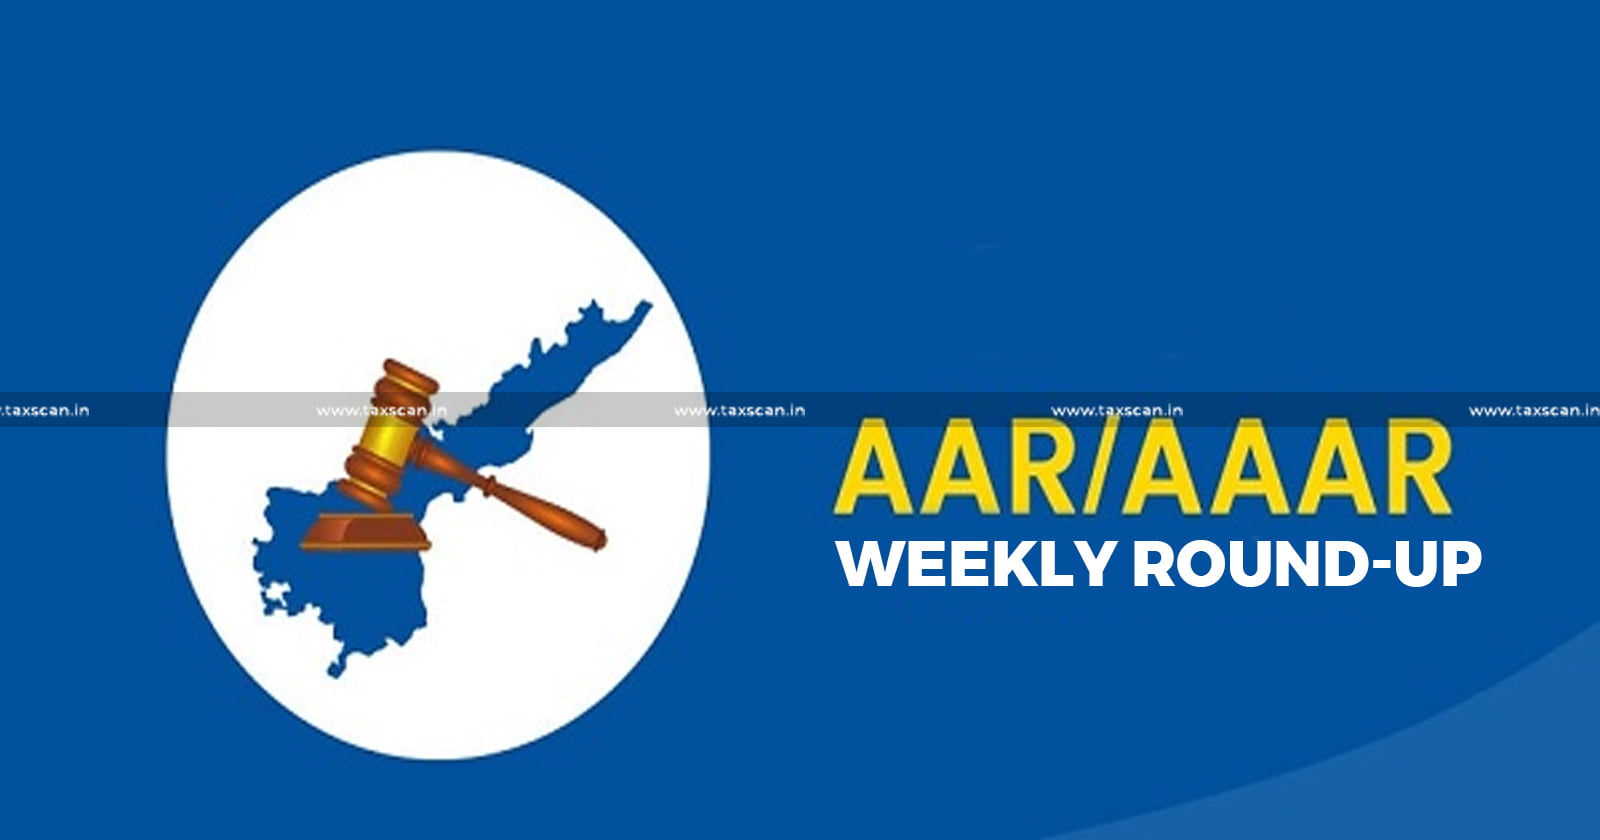 AAR - AND - AAAR - Weekly - Round - Up - TAXSCAN